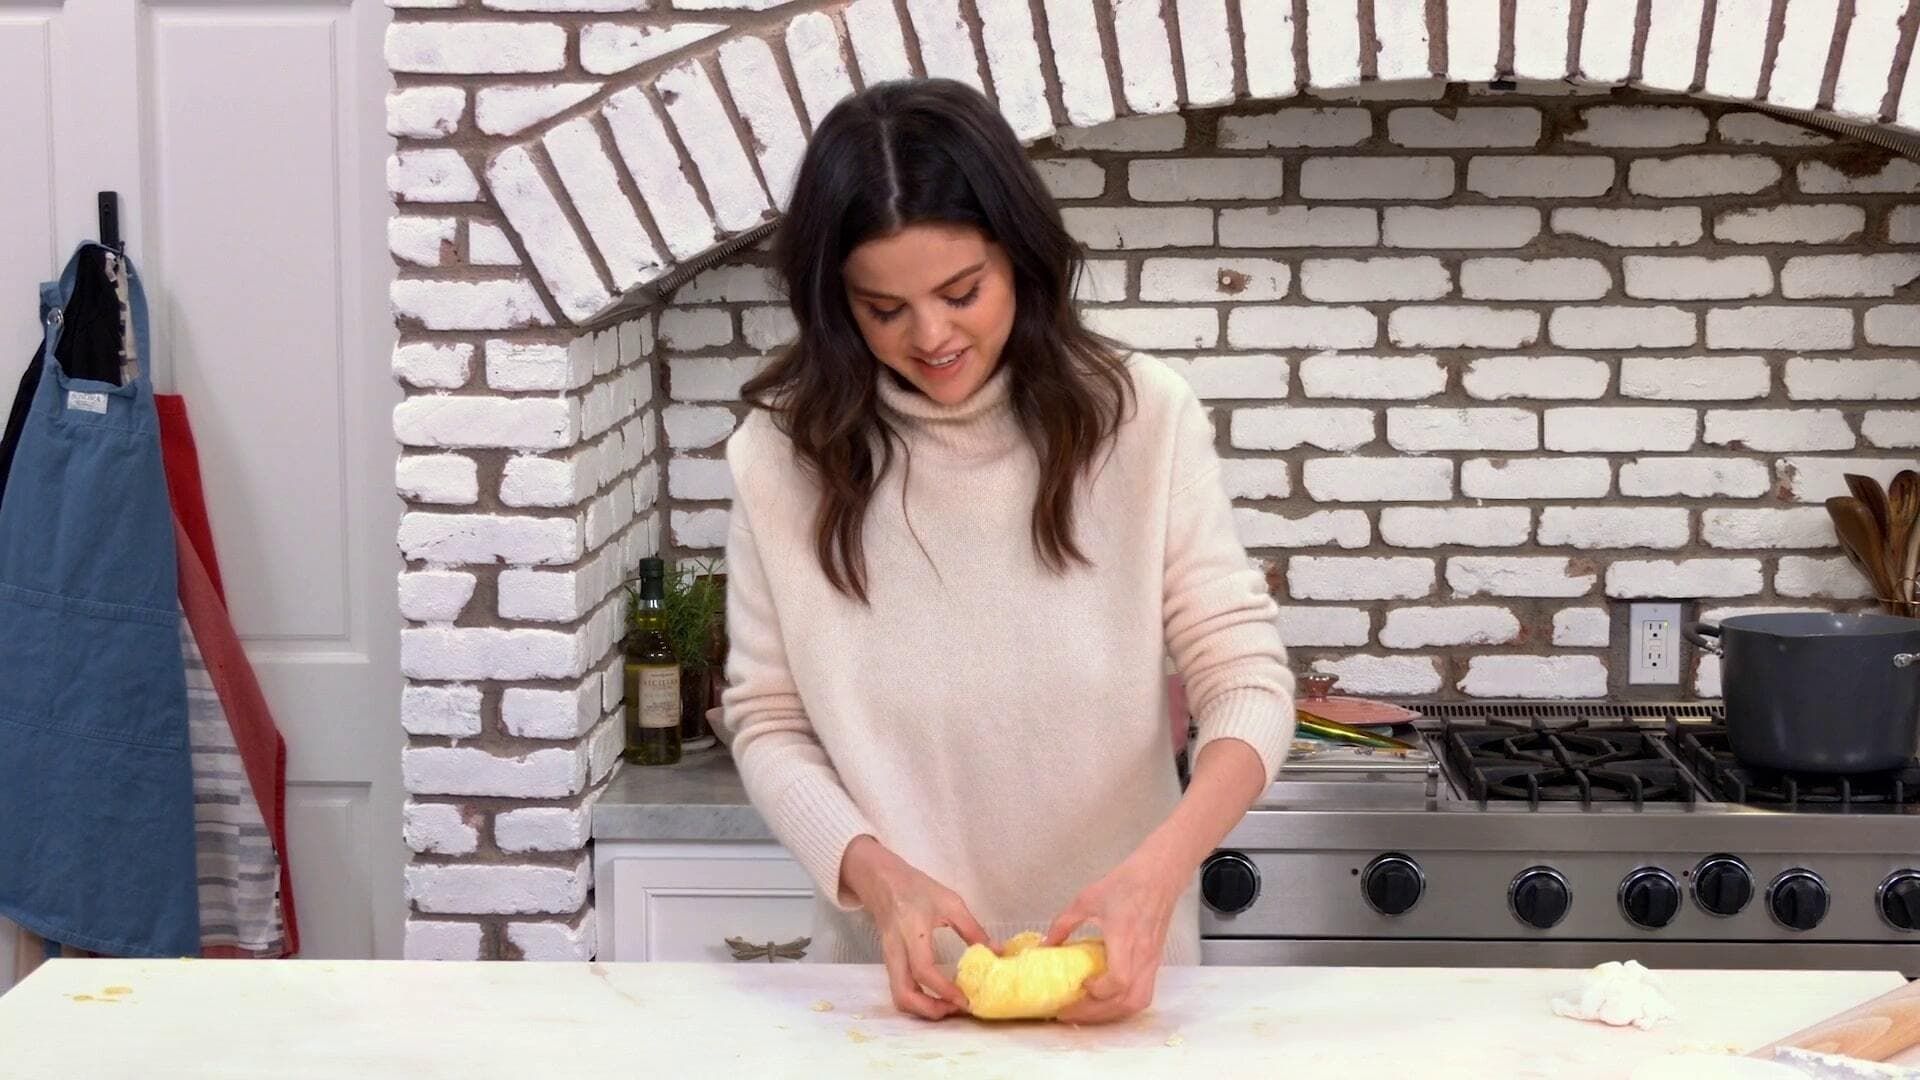 Selena + Chef background